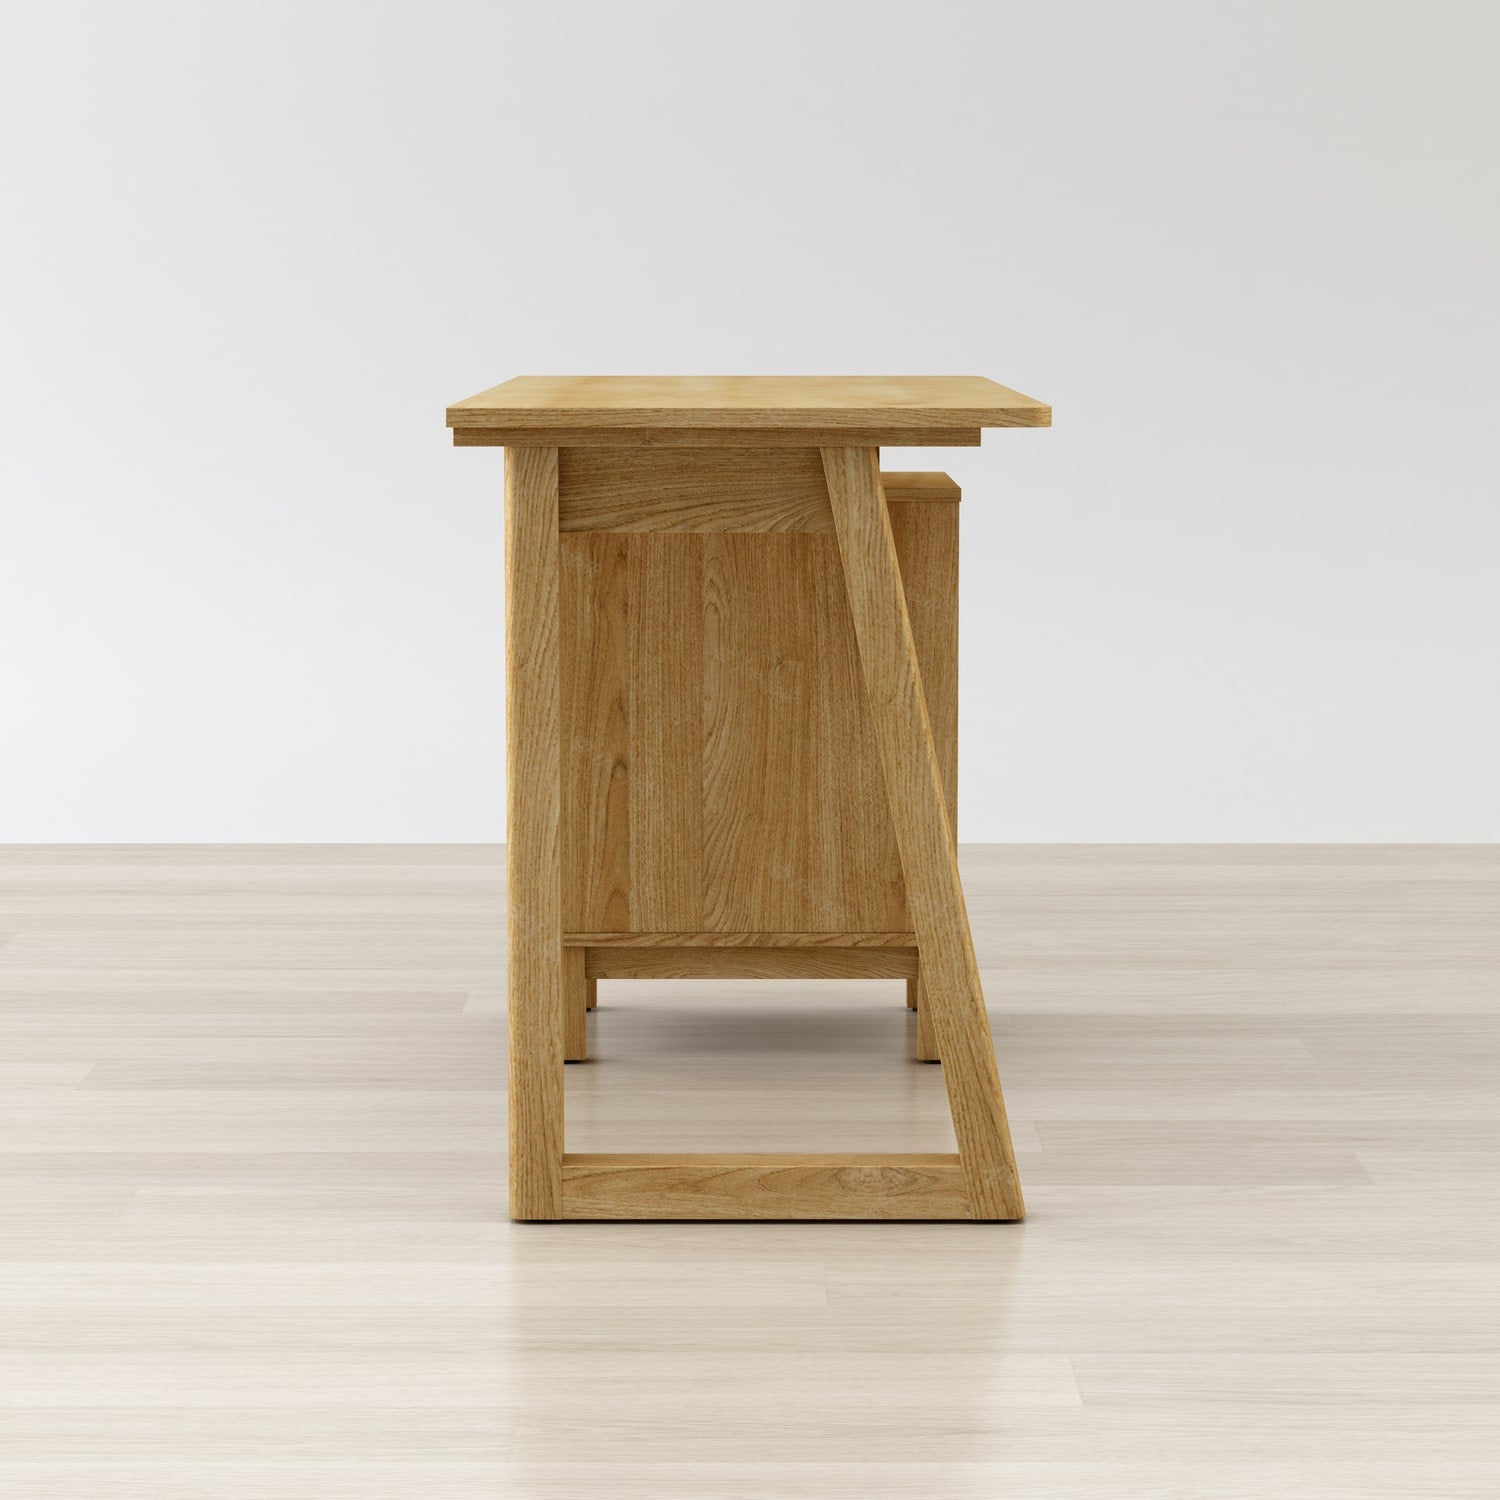 Anderson teak wood desk - side view